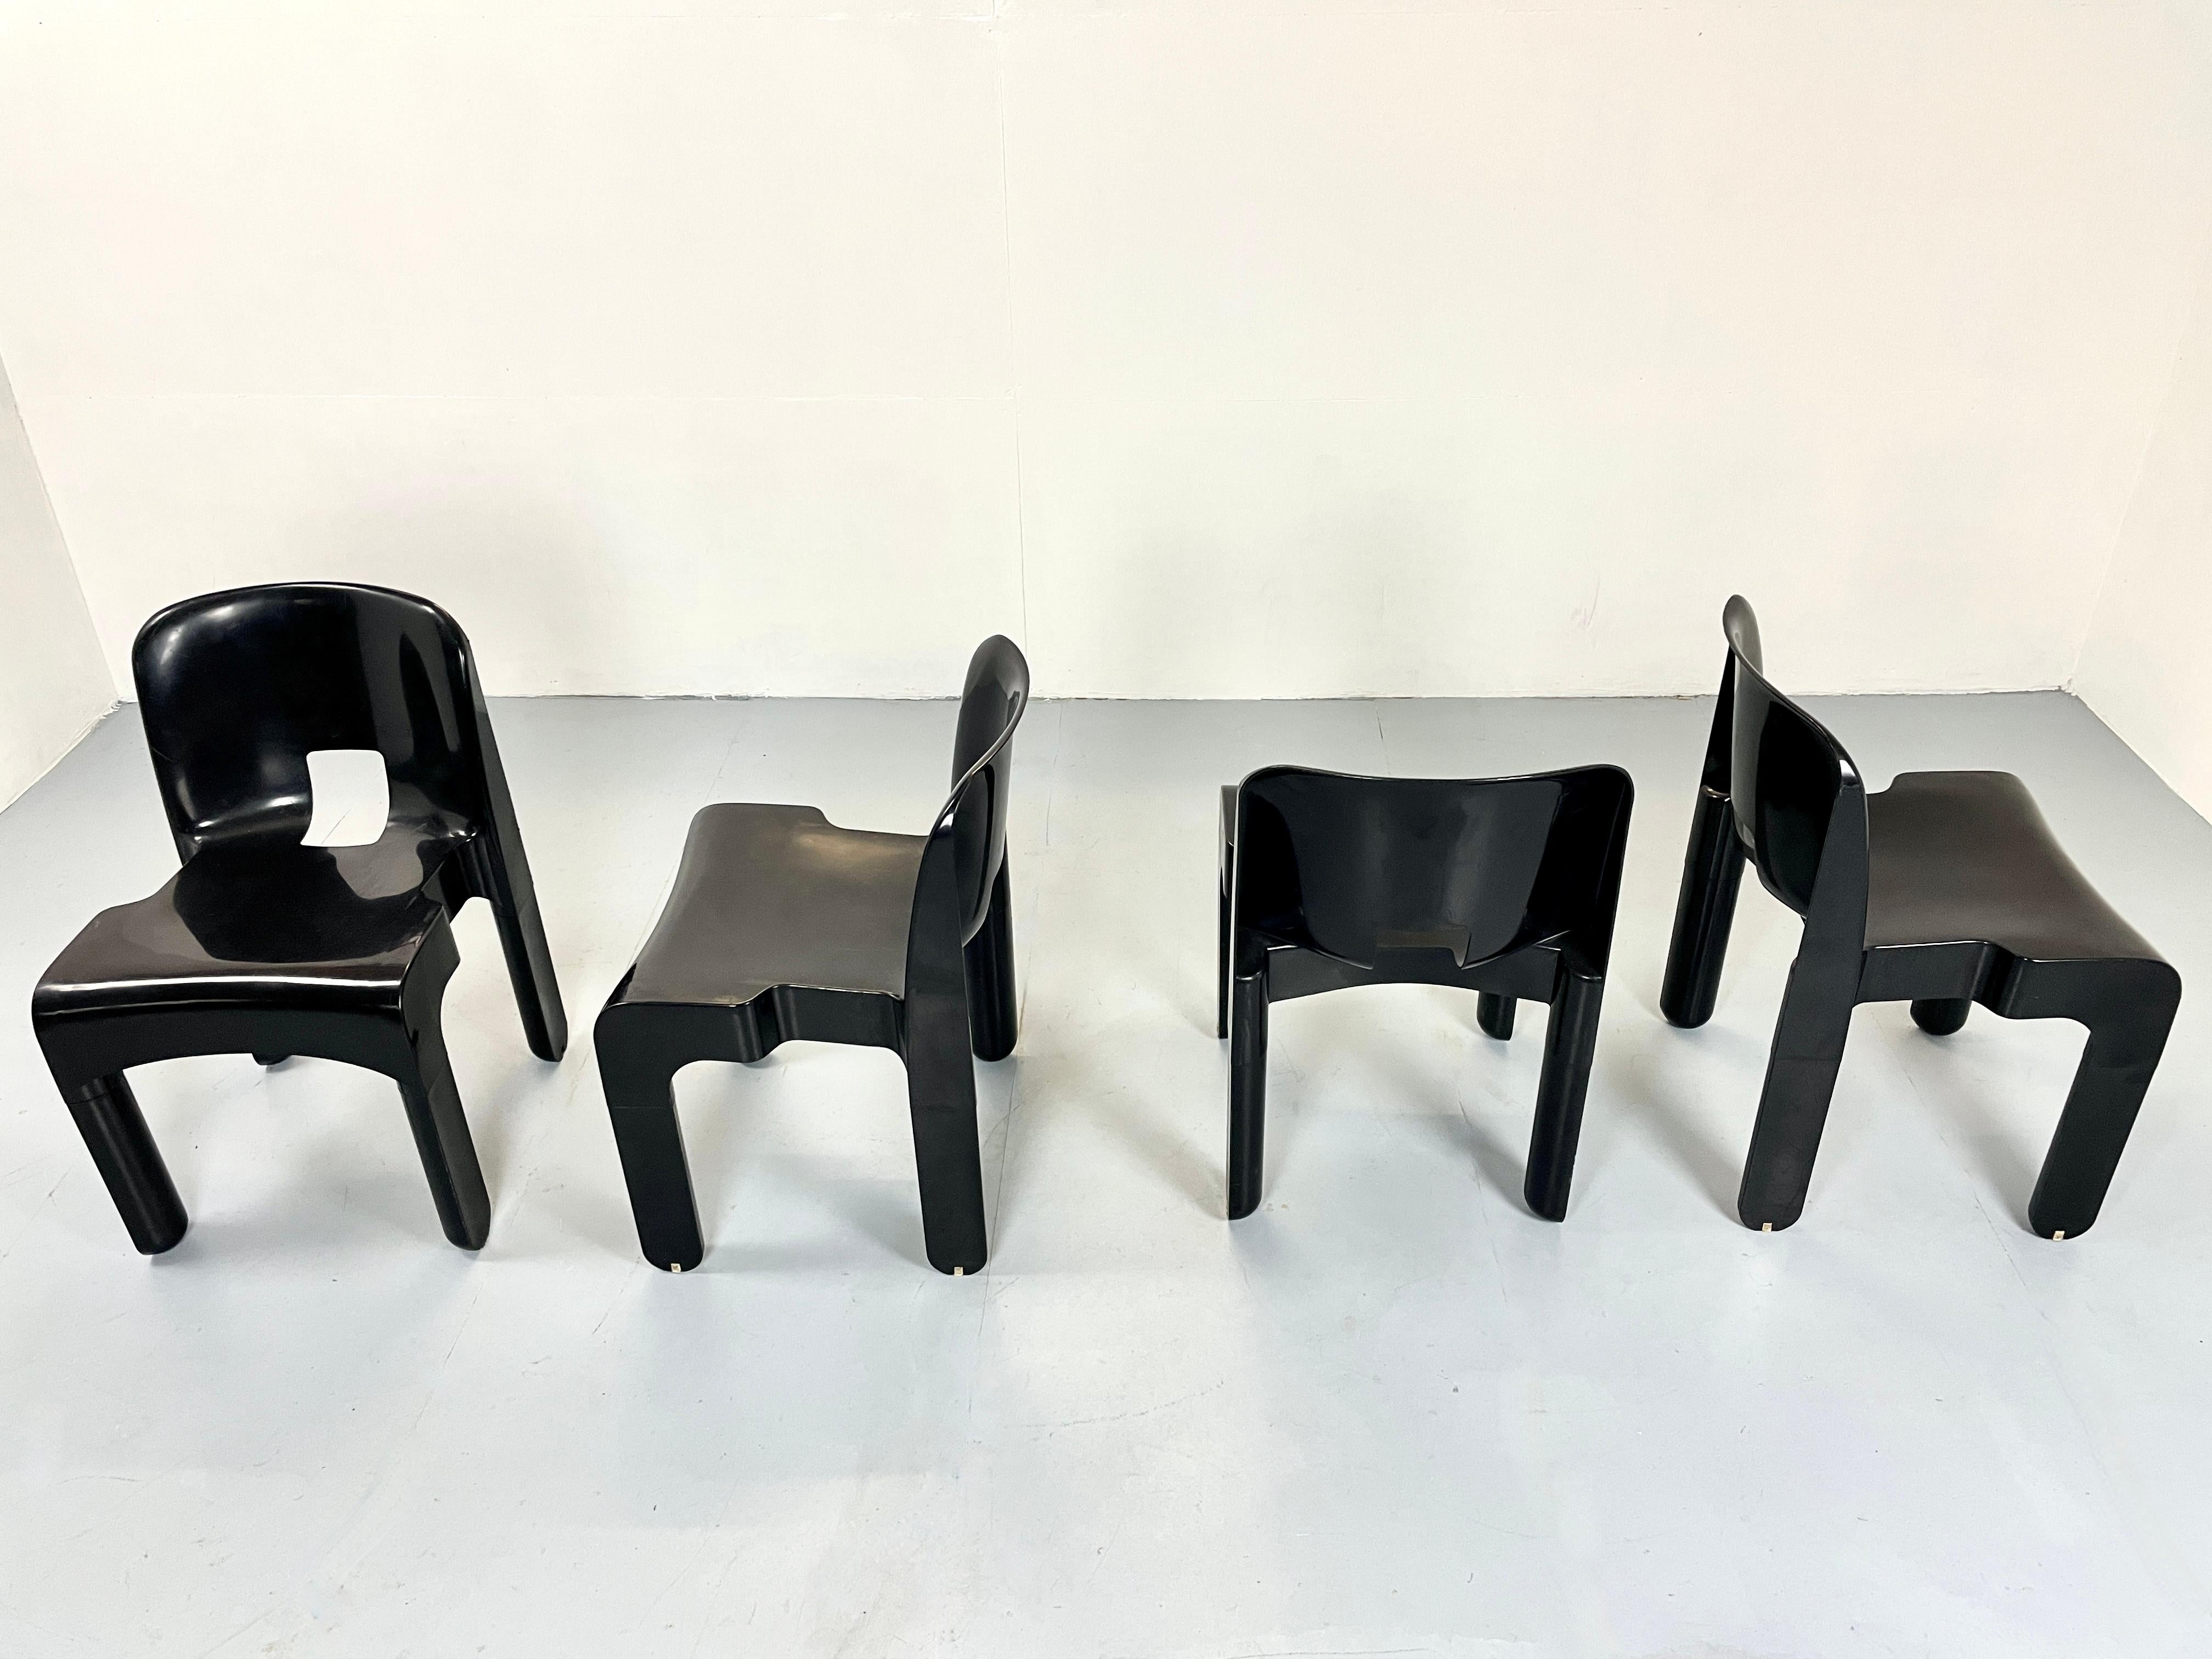  Joe Colombo, Universale Plastic Chair für Kartell, Weiß, Italien, Vintage, Space Age (Kunststoff)